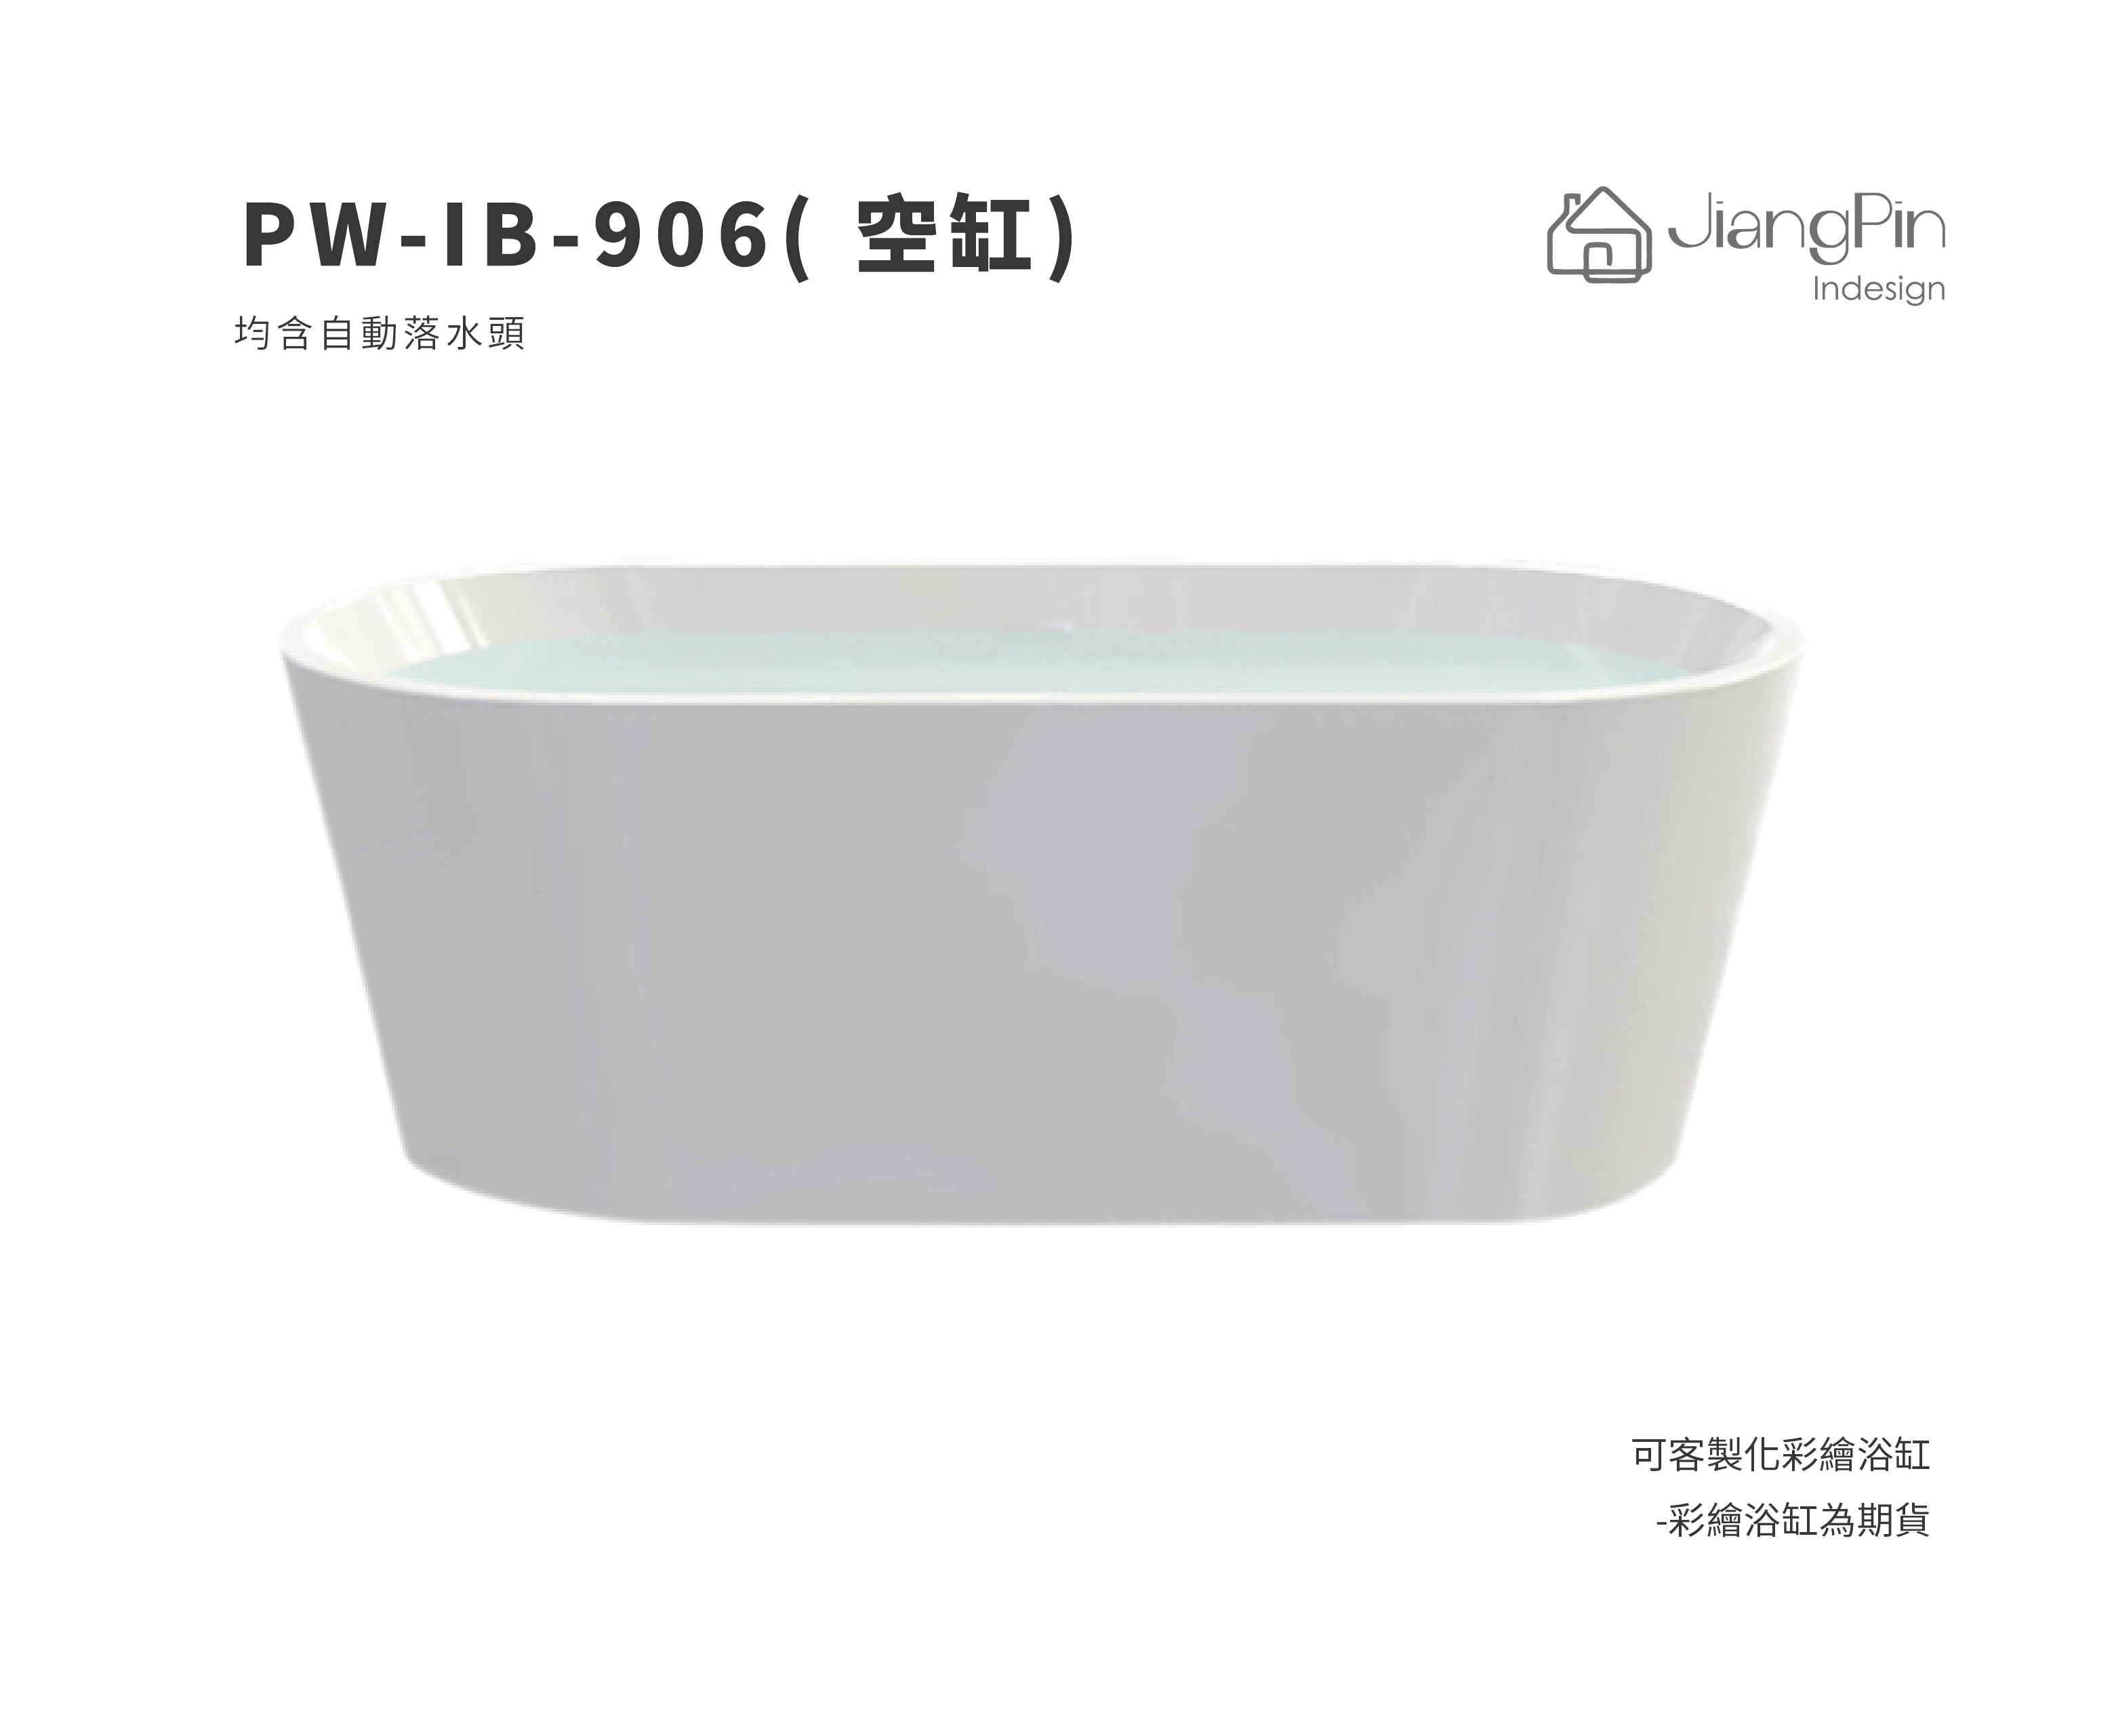 PW-IB-906( 空缸) 壓克力浴缸 120-170cm